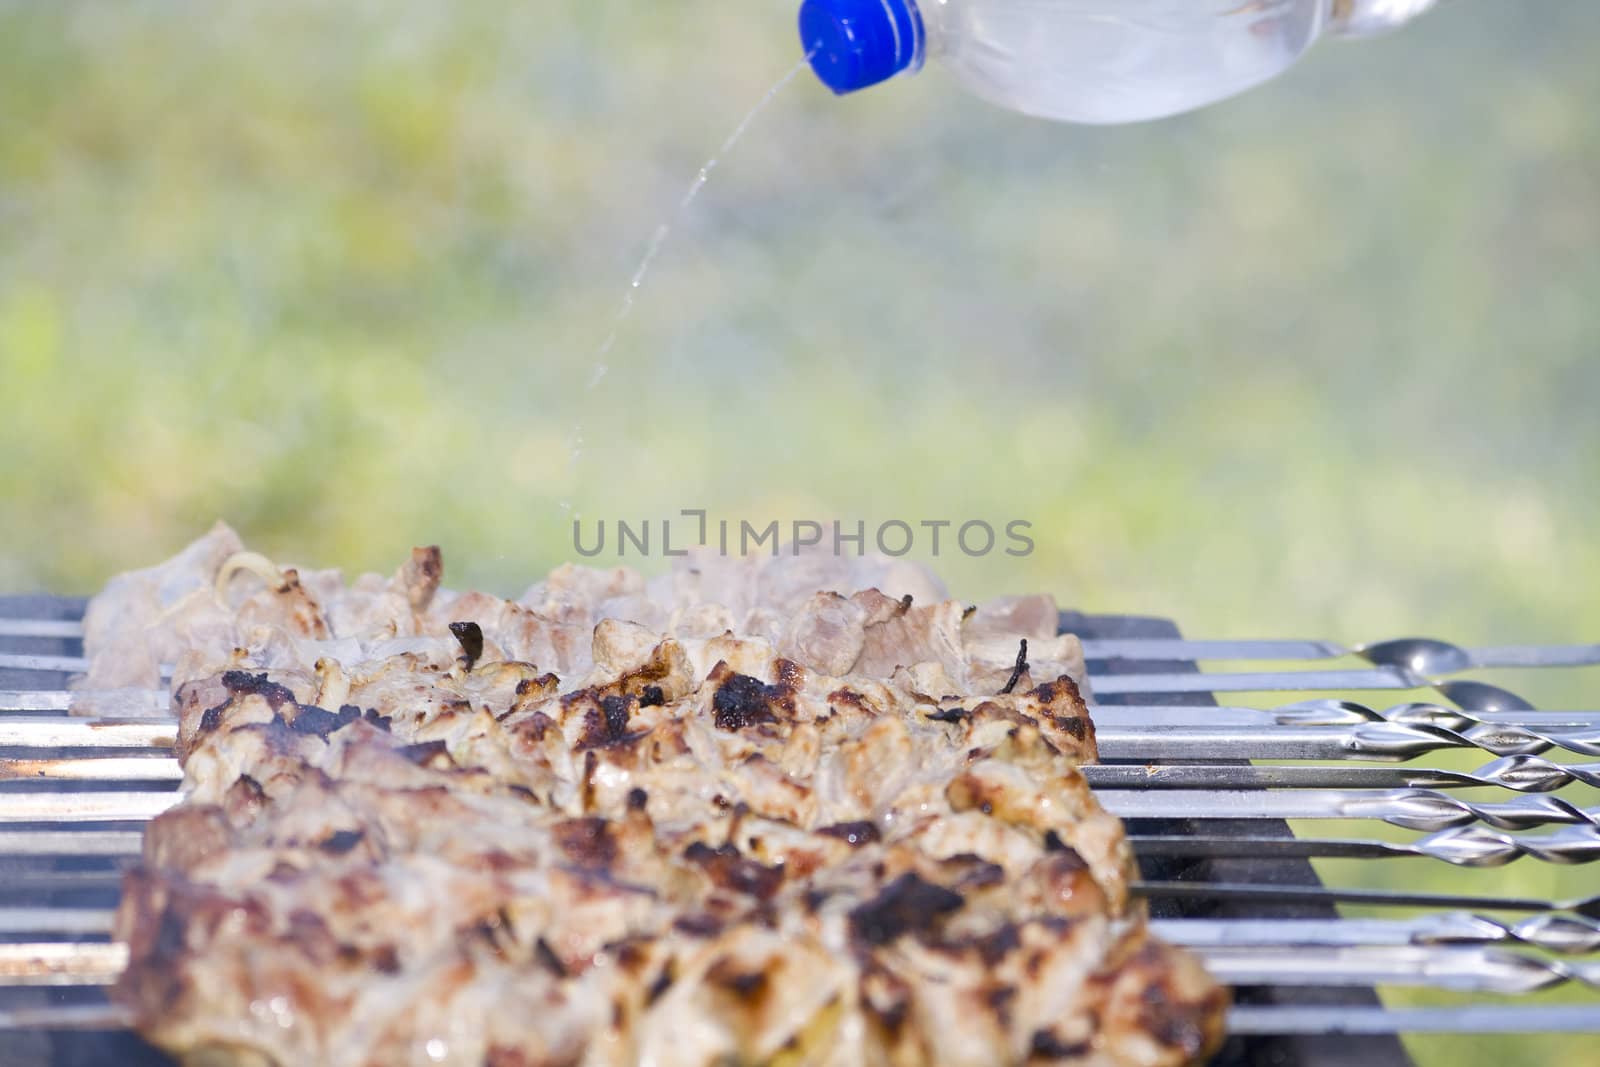 Shish kebab on the grill by Dan70